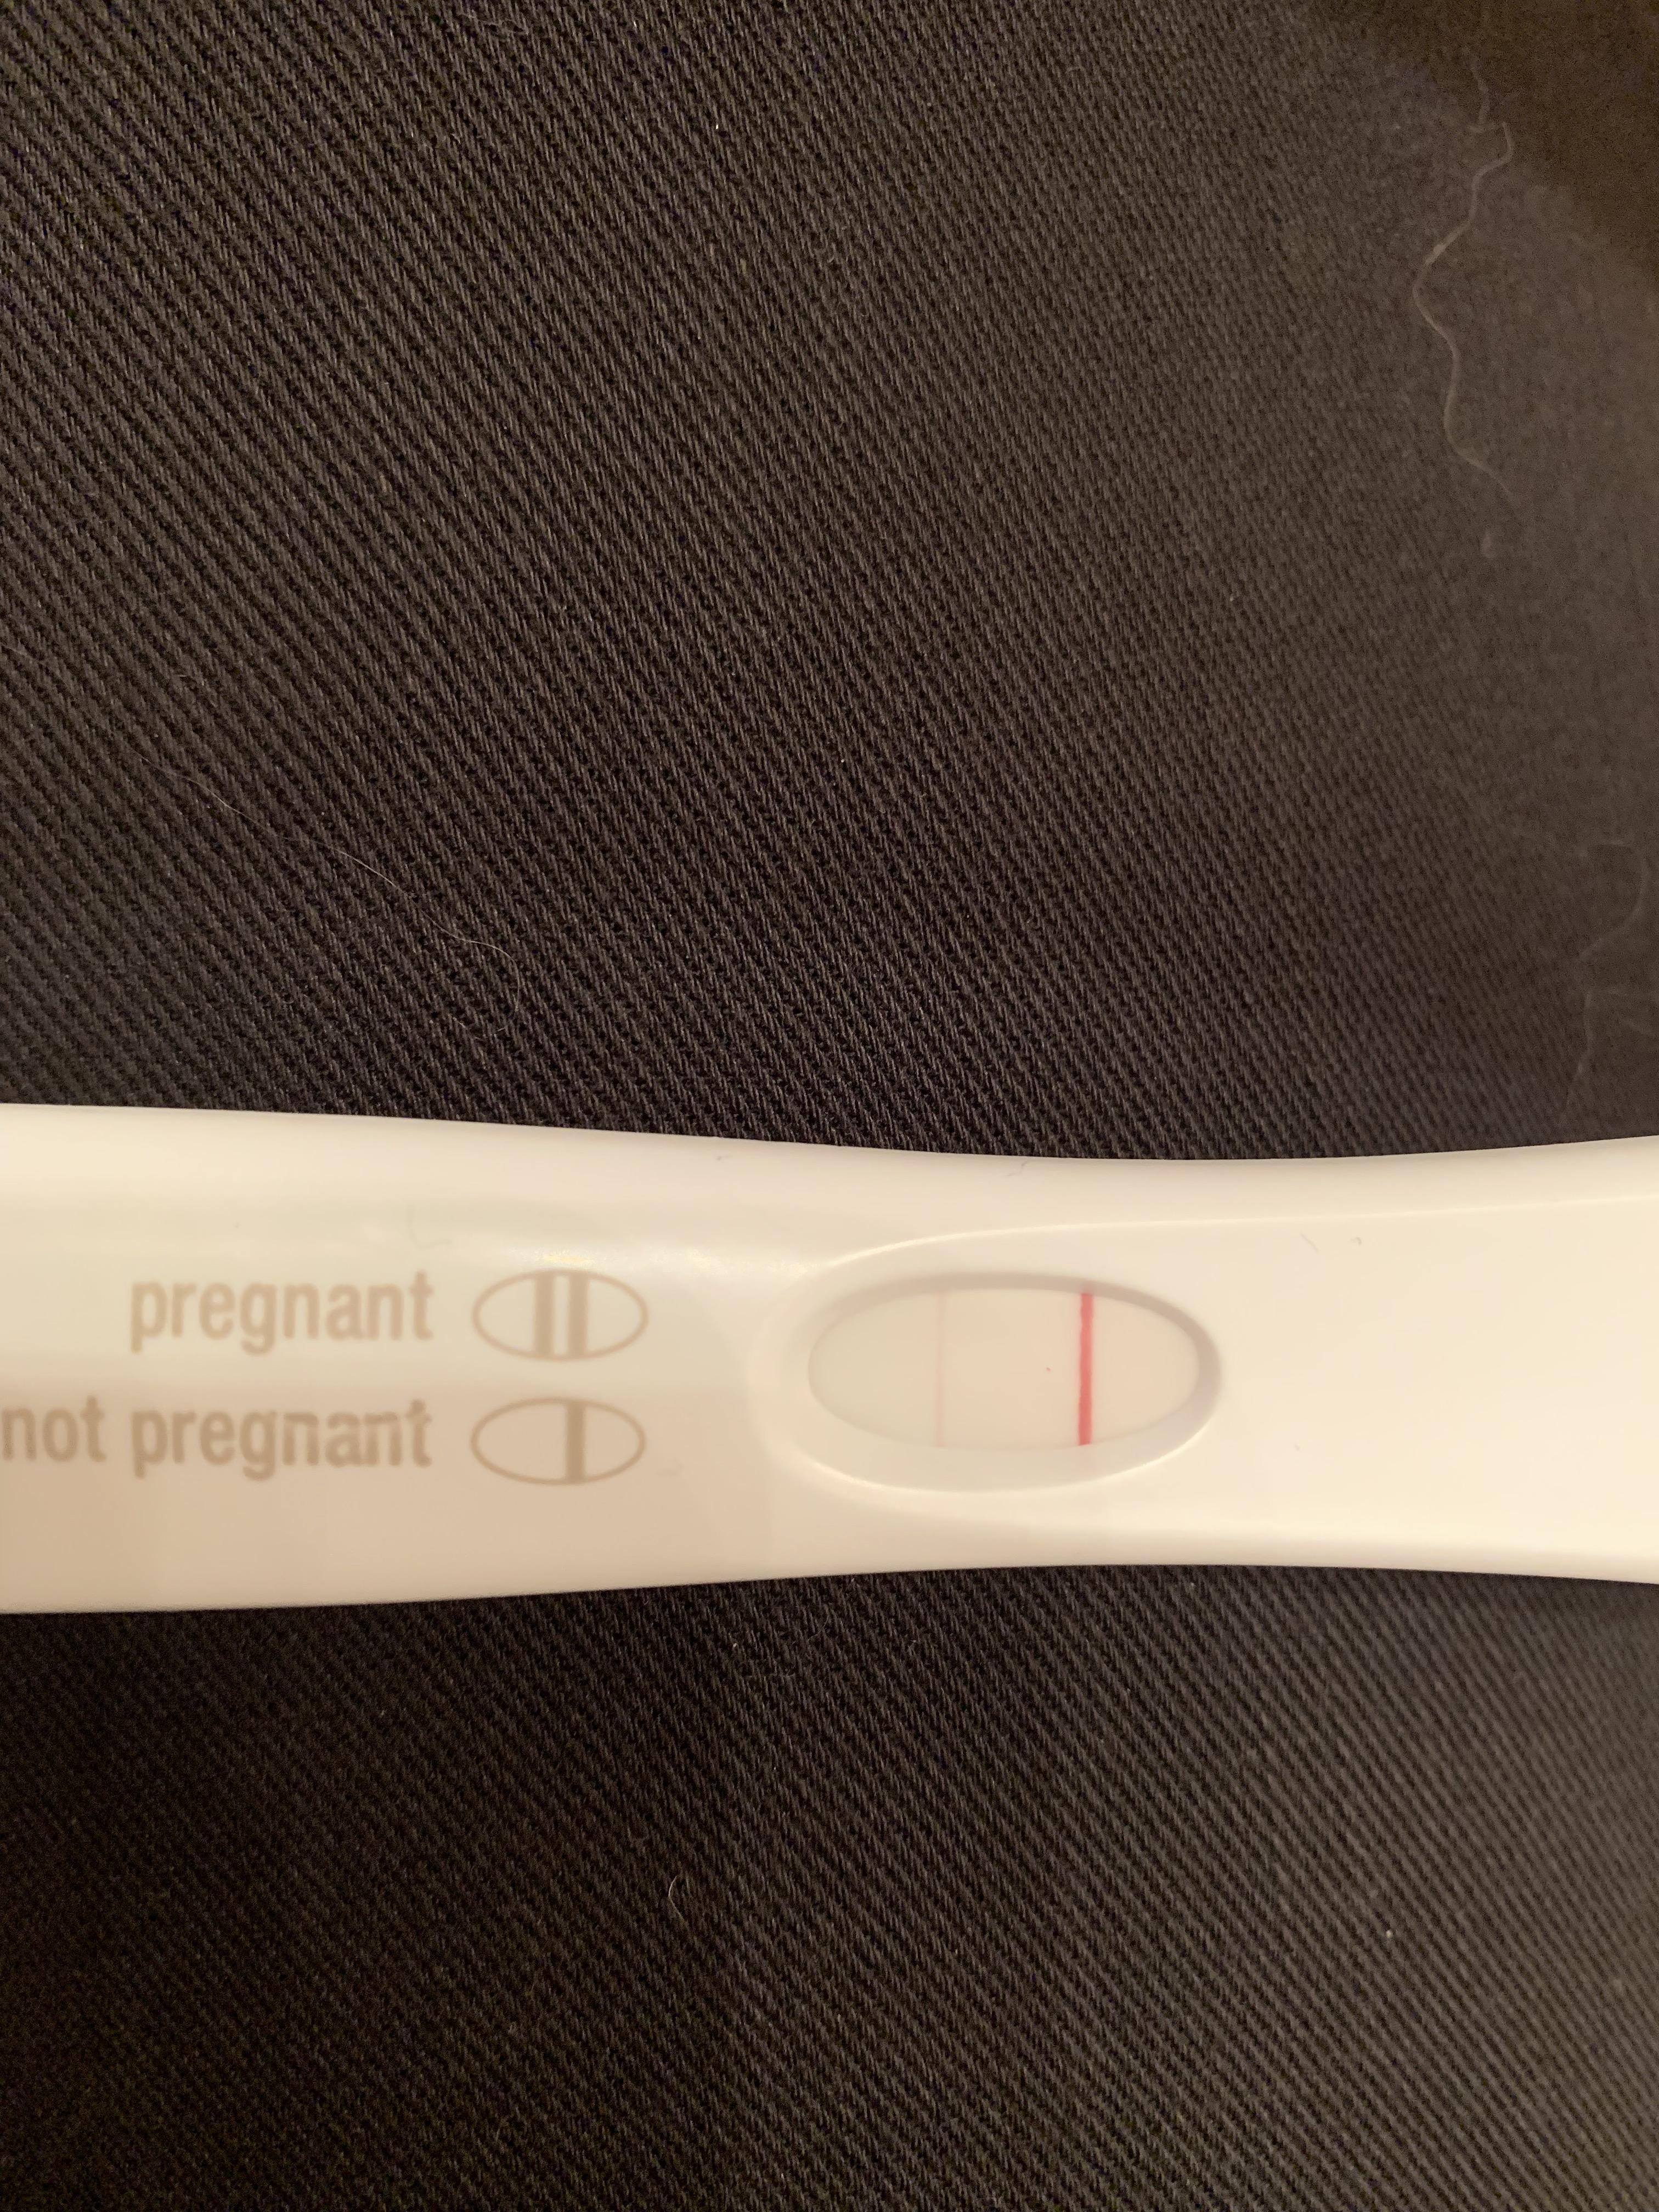 Took A Pregnancy Test 5 Days Before Missed Period Negative Pregnancy Test